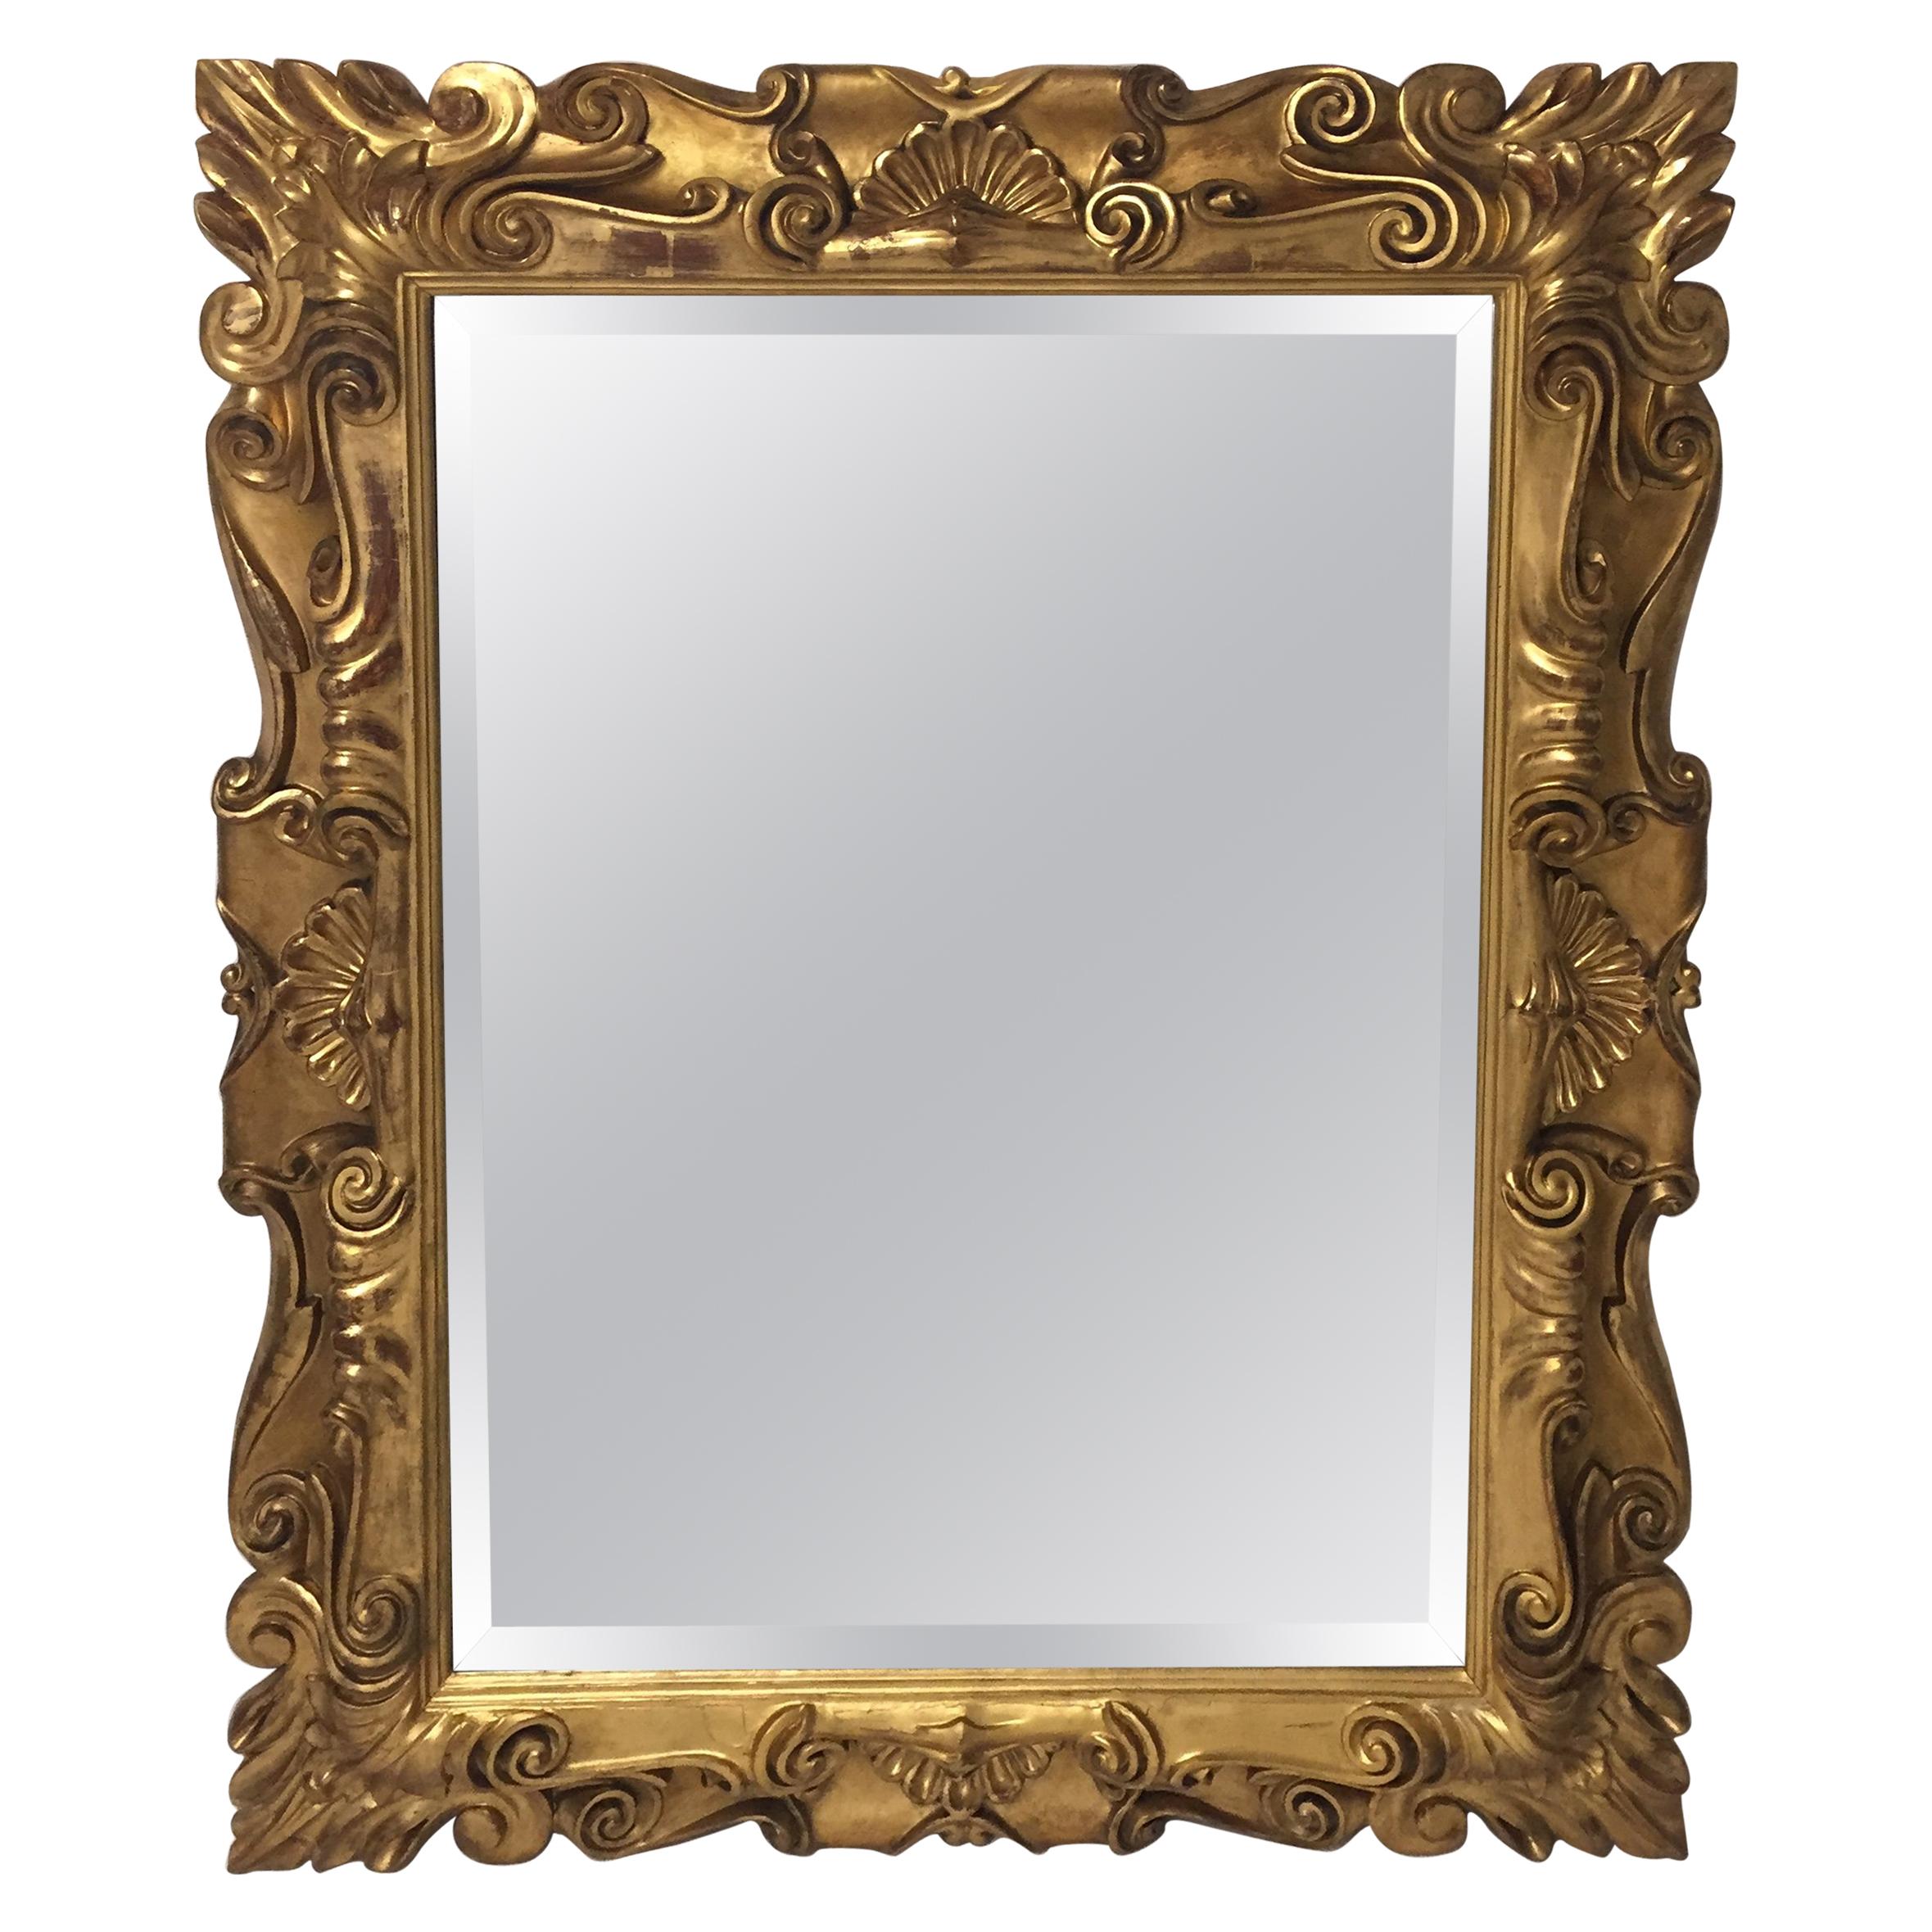 Impressive Italian Carved 22-Carat Gold Leaf Giltwood Mirror